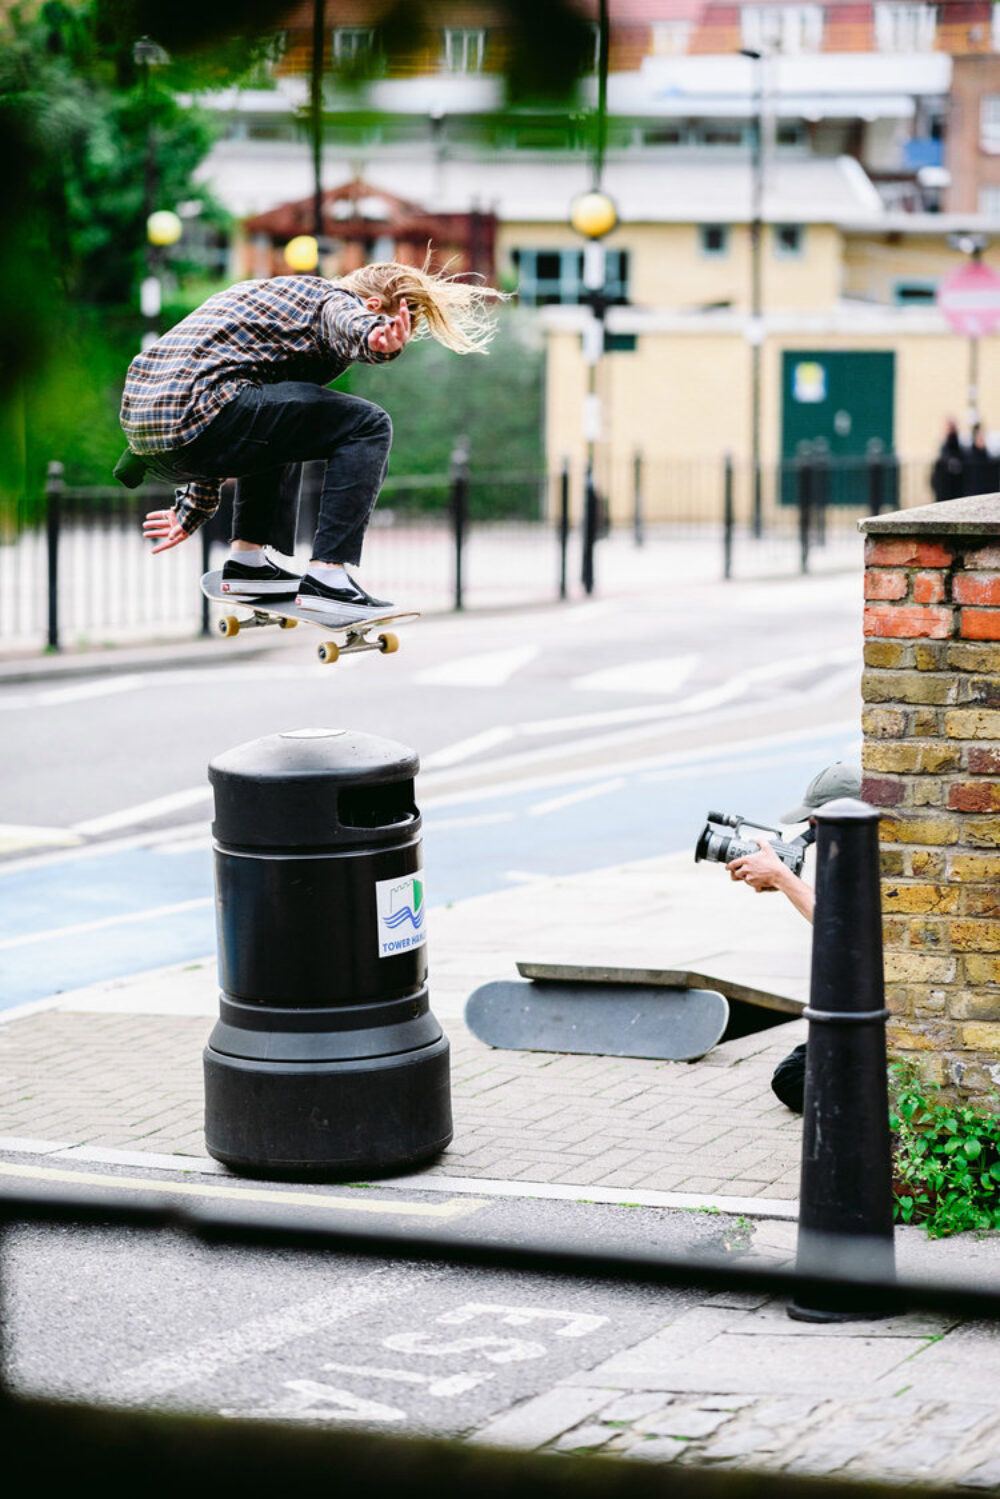 _ihc2905e-justin-biddle-bump-to-bs-180-levis-skateboarding-london-august-2017-photographer-maksim-kalanep